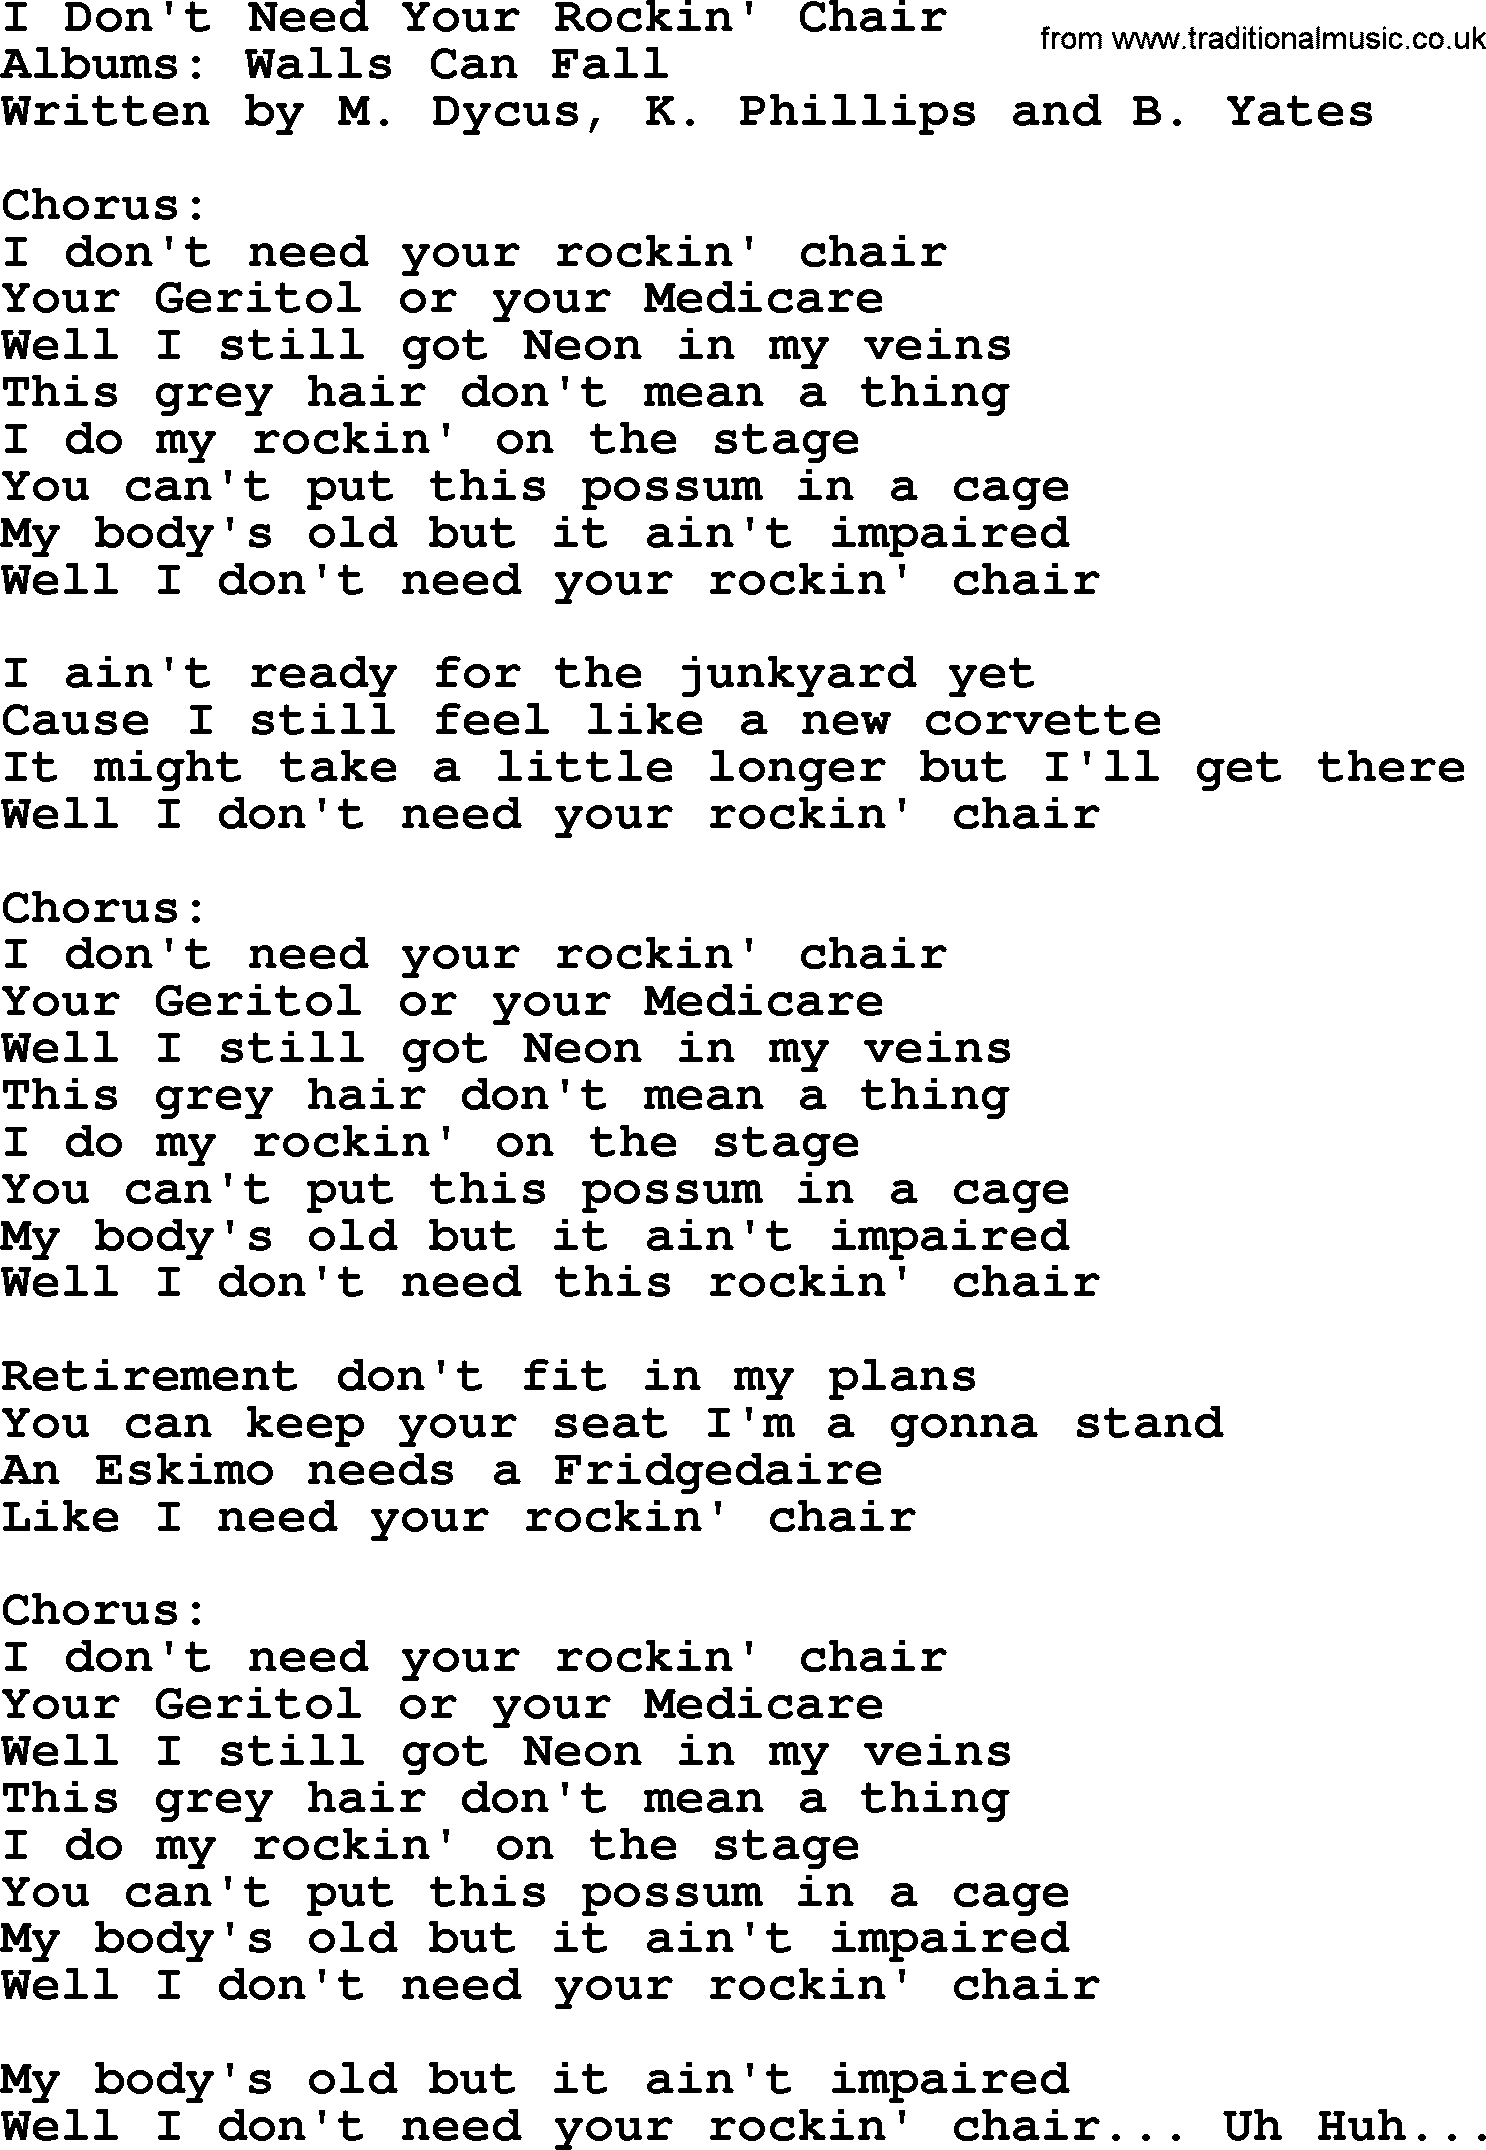 George Jones song: I Don't Need Your Rockin' Chair, lyrics